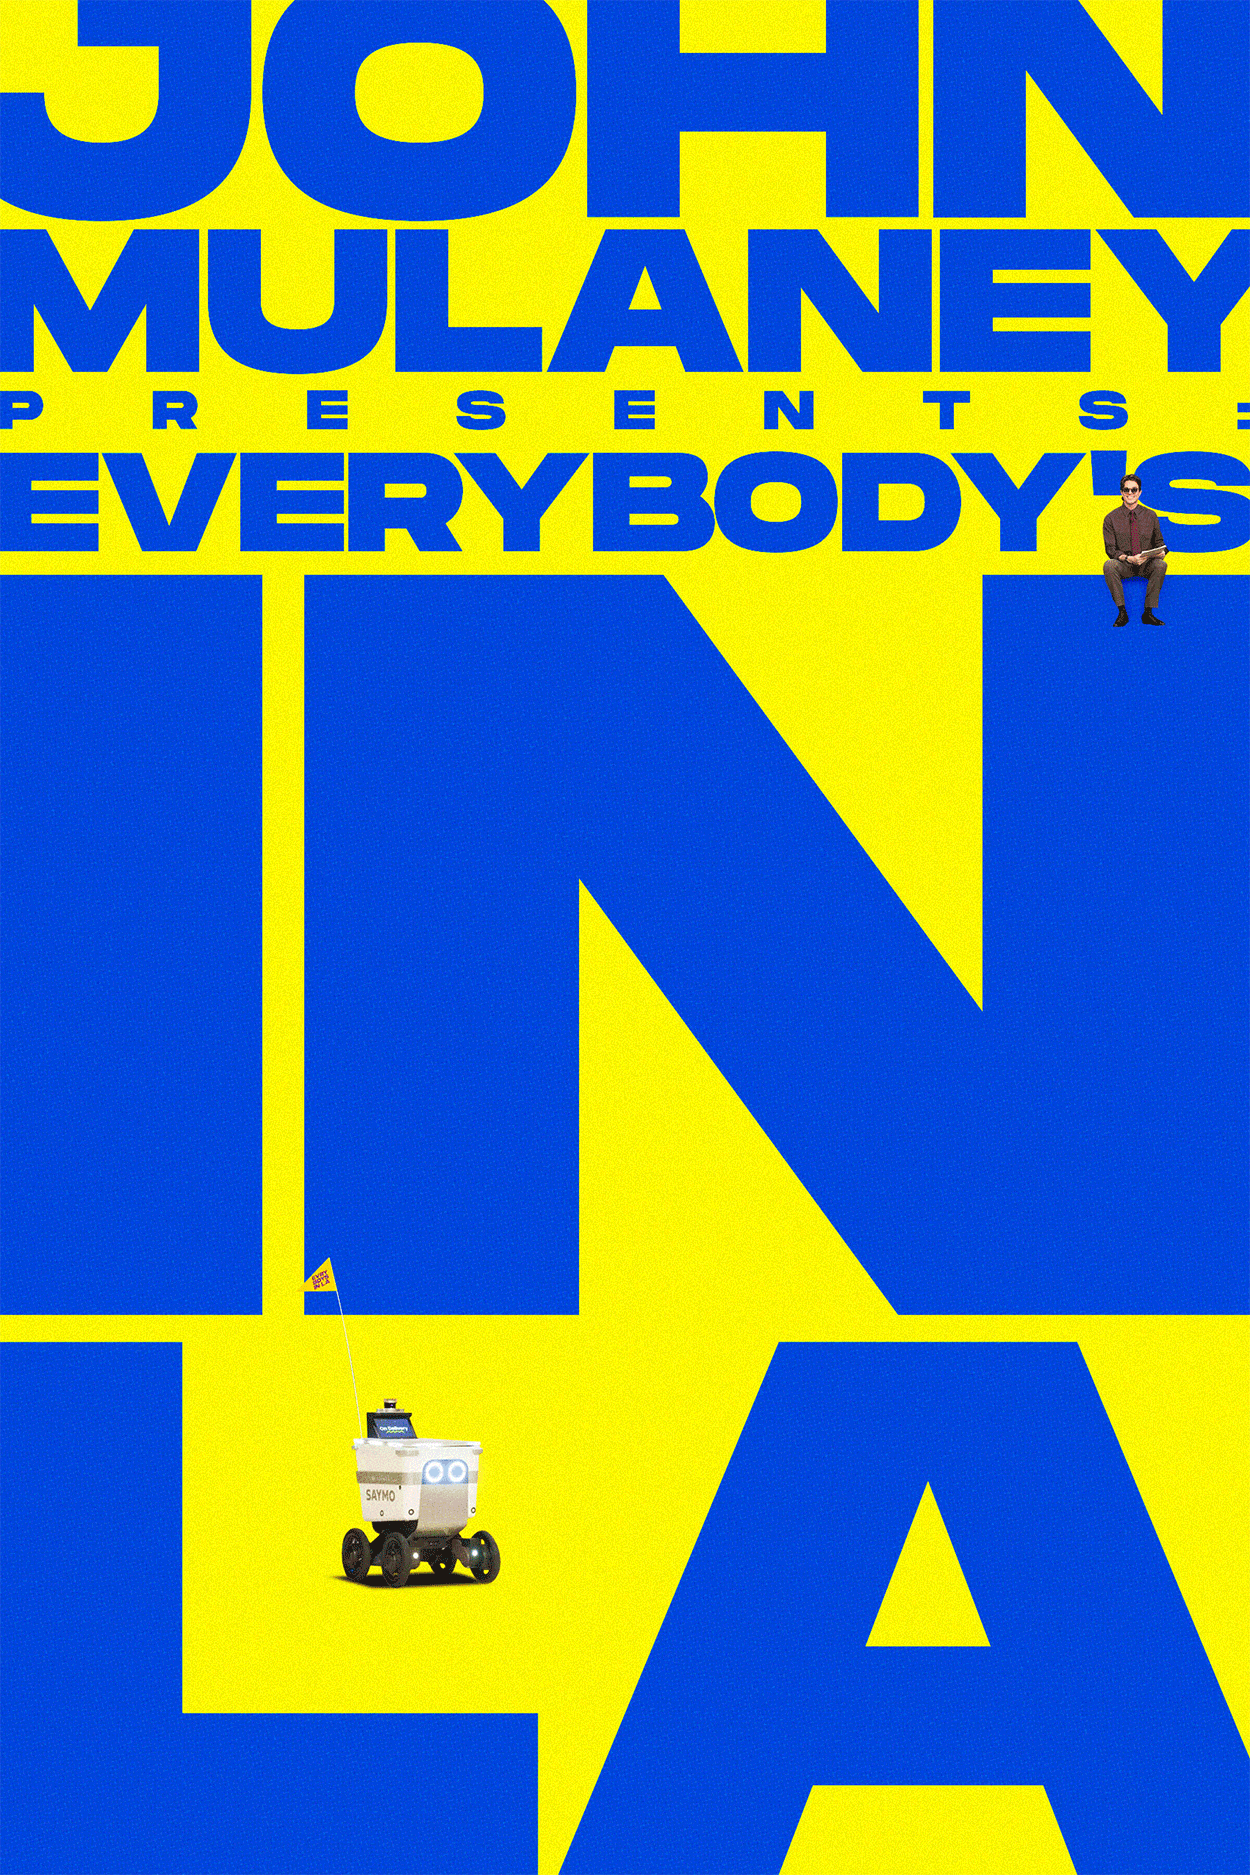 John Mulaney Presents: Everybody’s in LA